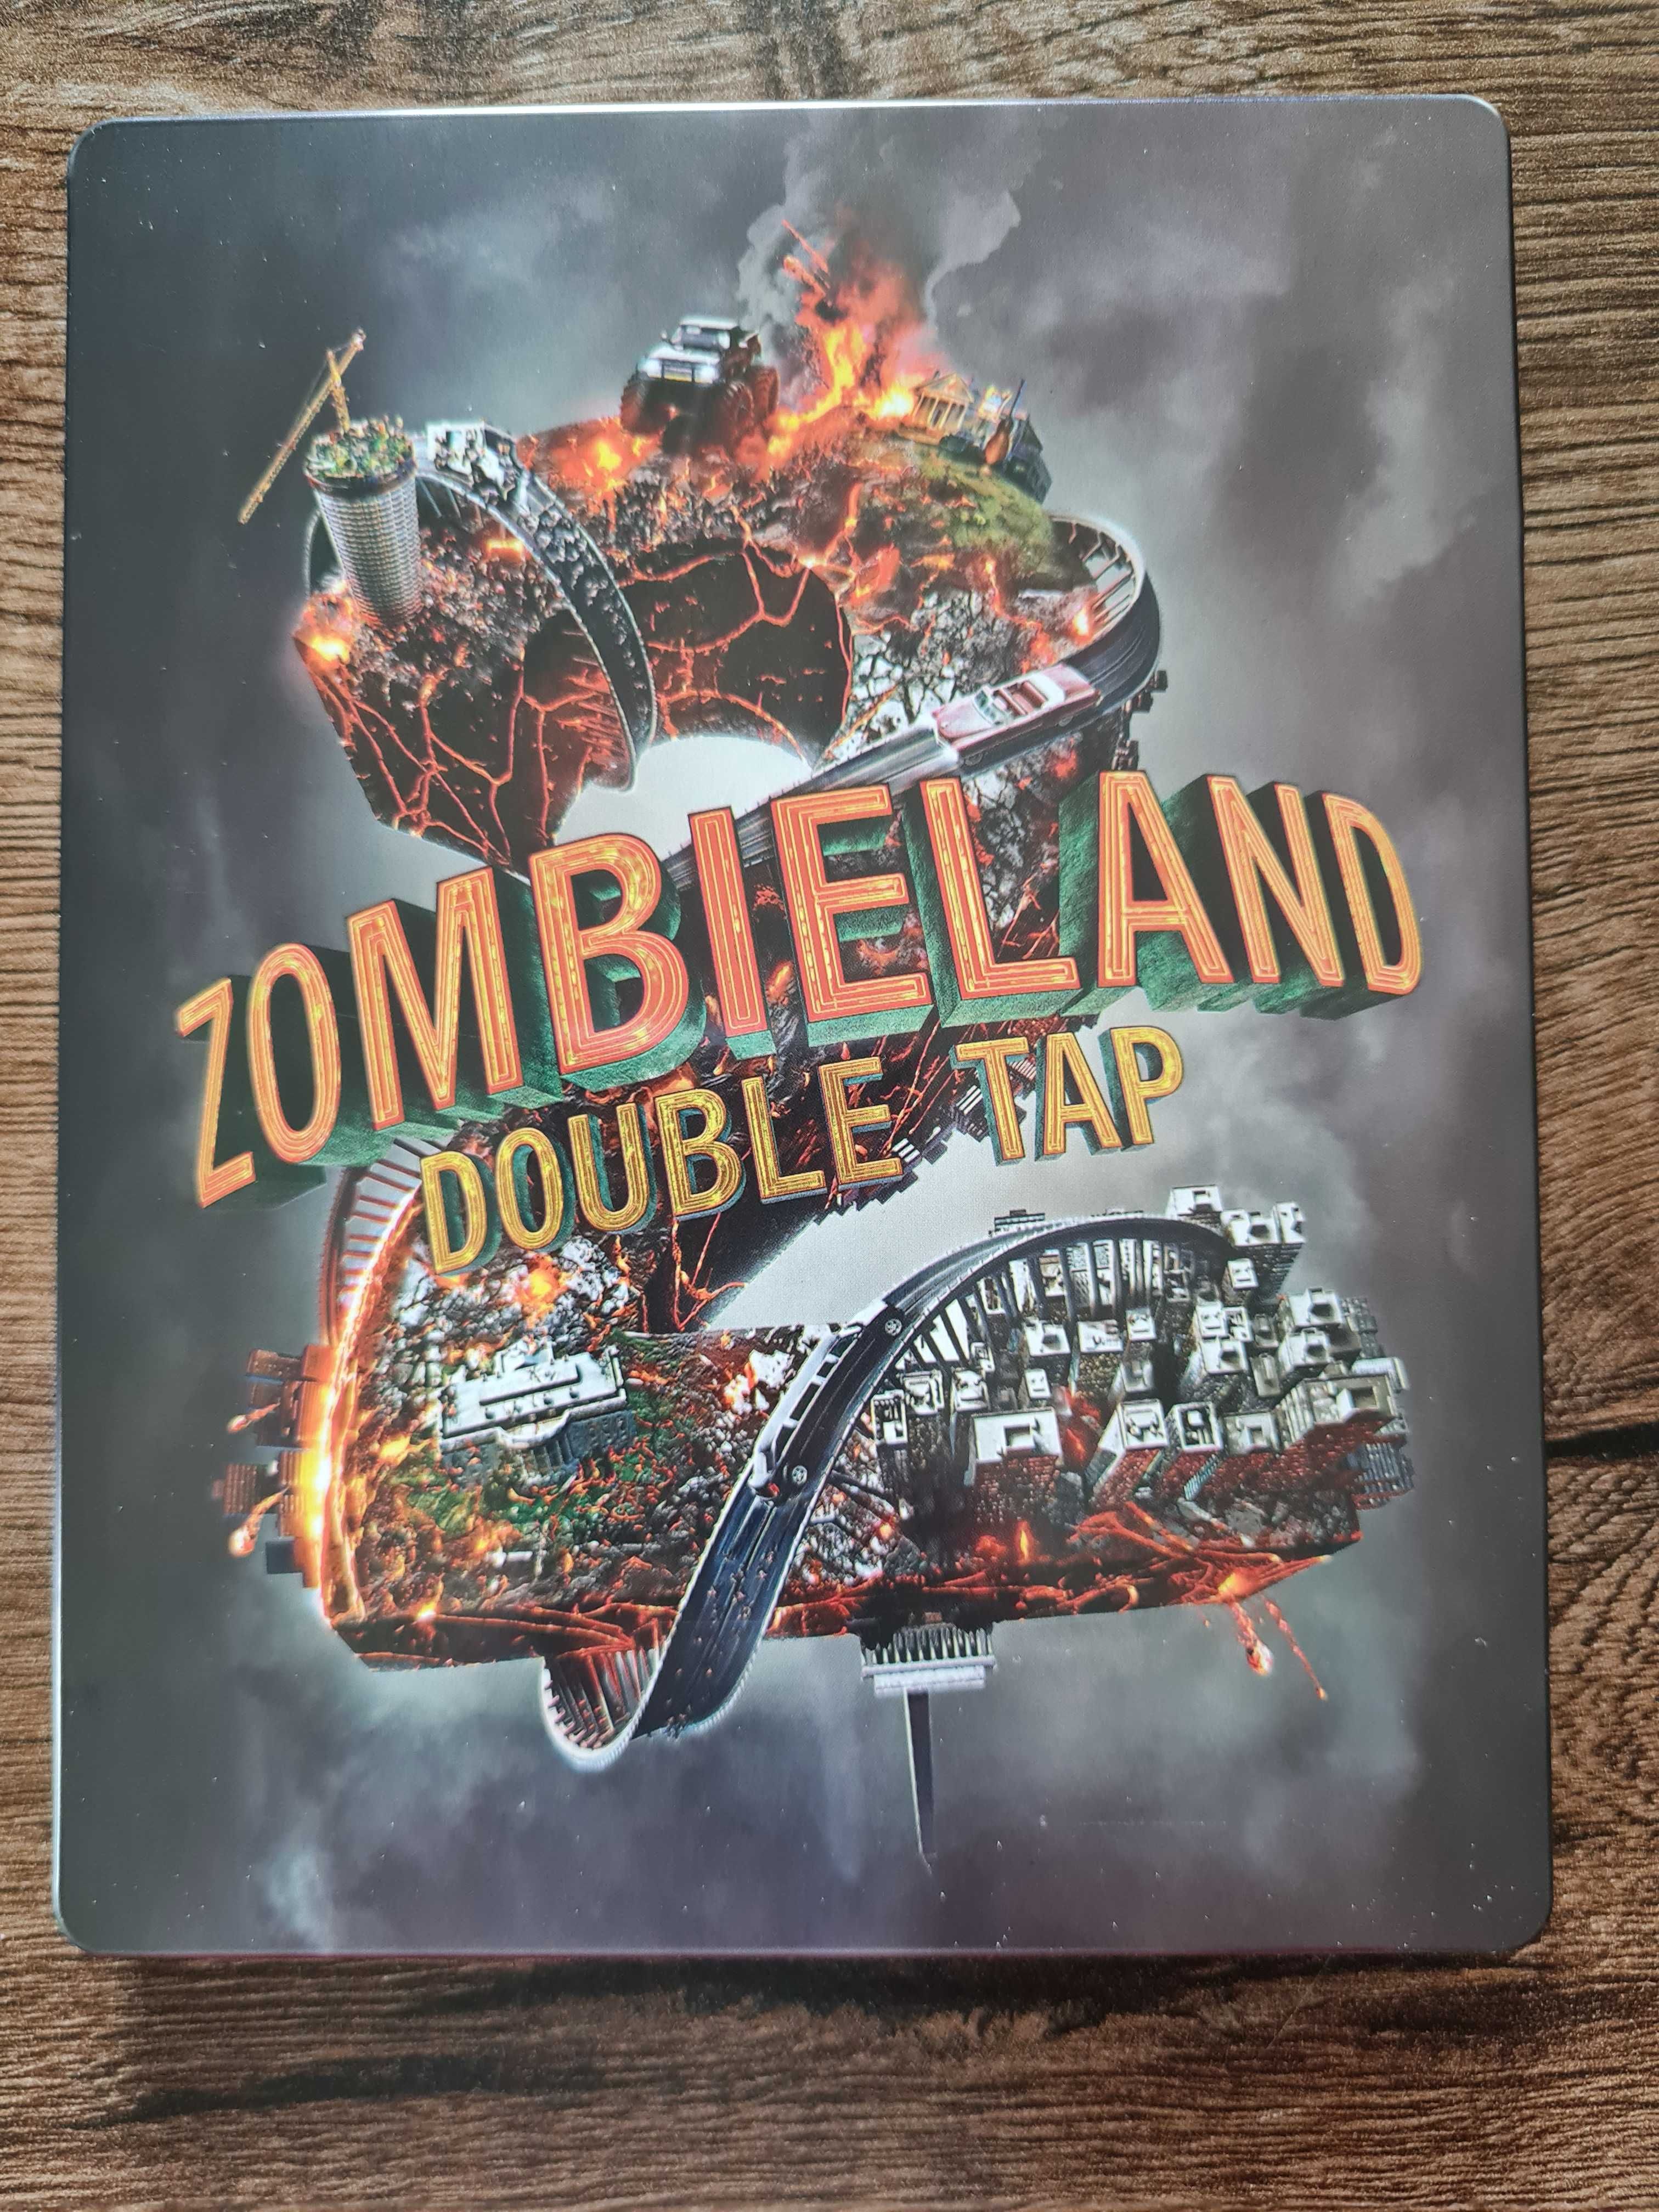 Zombieland: Kulki w łeb 4K UHD Steelbook